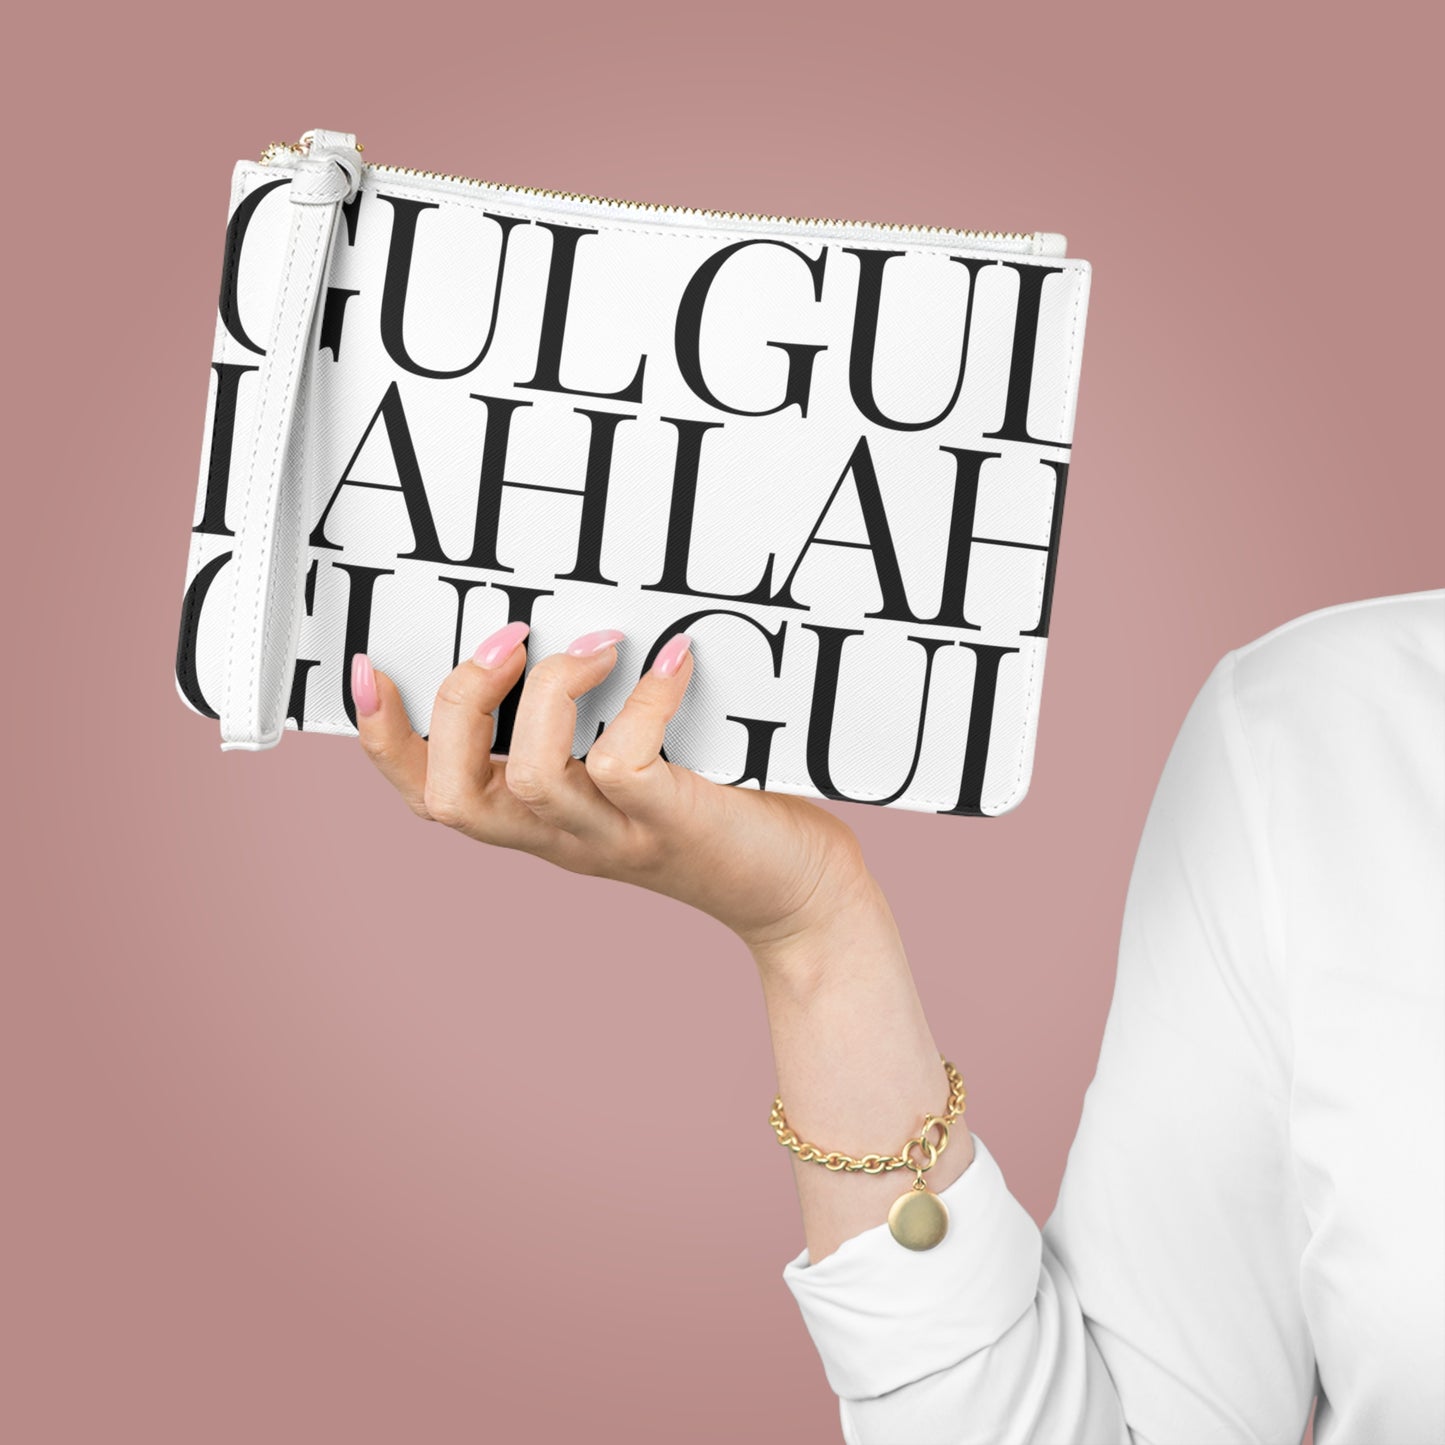 Gullah Composition Bold White Clutch Bag